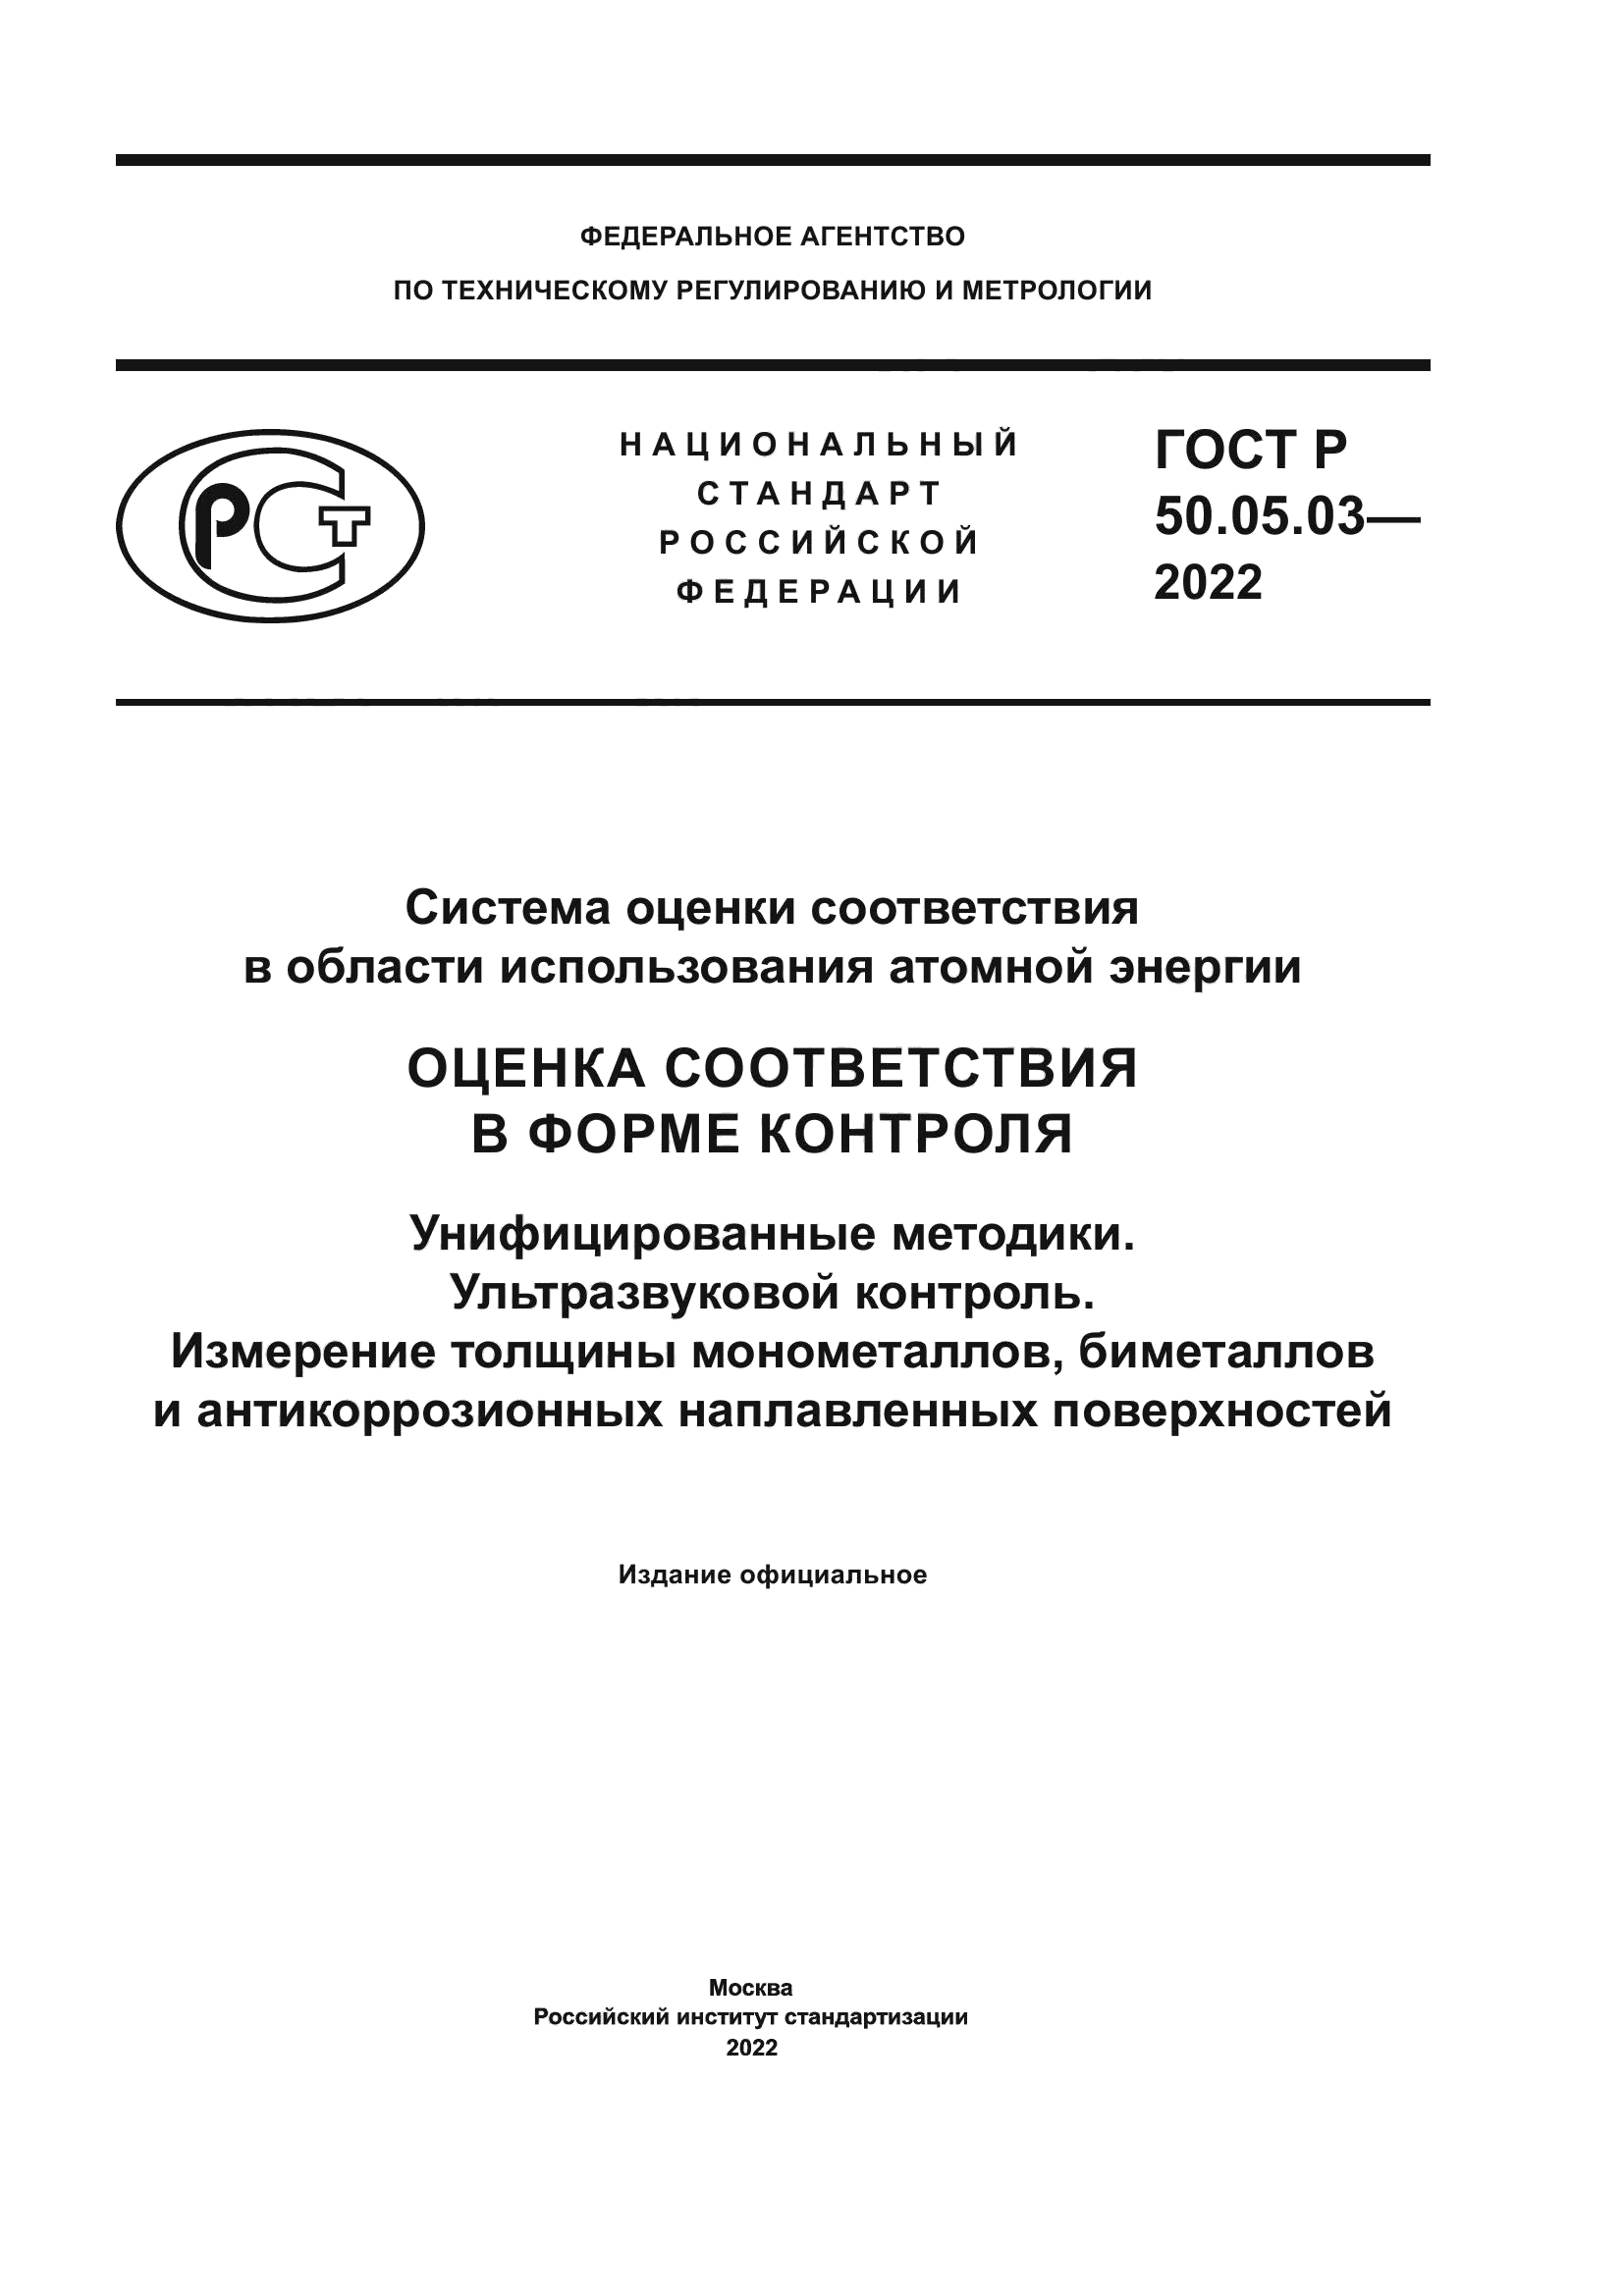 ГОСТ Р 50.05.03-2022